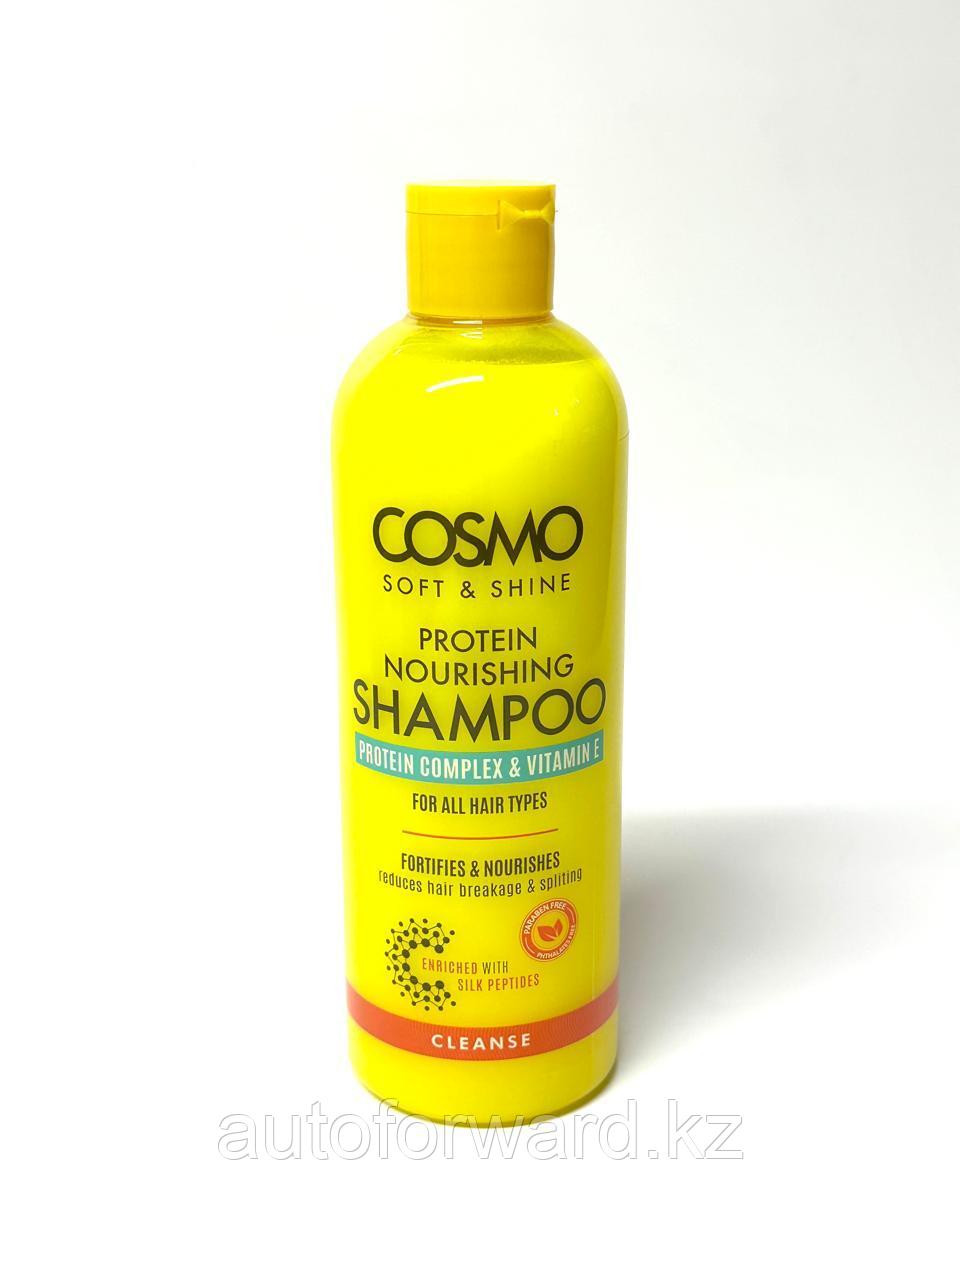 Шампунь COSMO SOFT & SHINE PROTEIN NOURISHING 480 ml (для сухих волос)